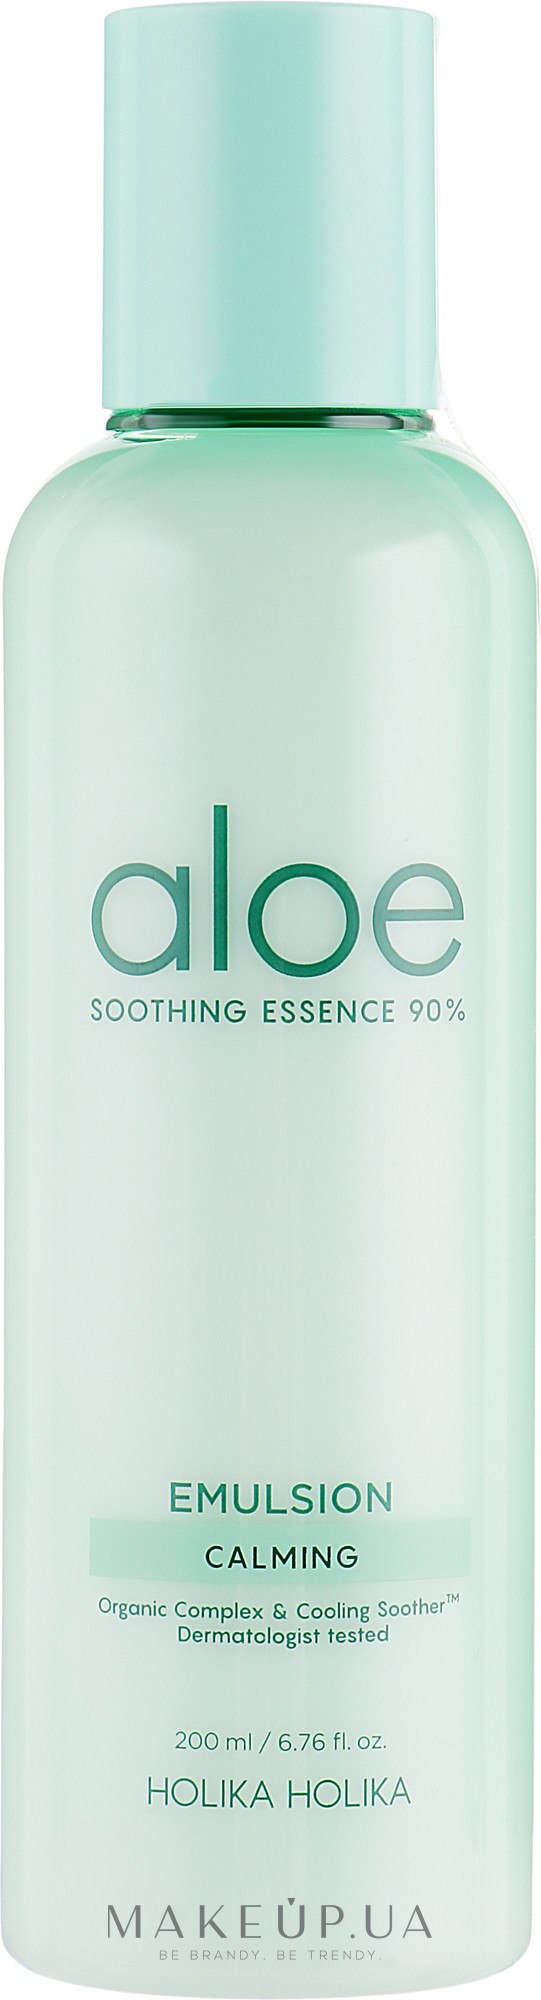 Увлажняющая эмульсия для лица - Holika Holika Aloe Soothing Essence 90% Emulsion Calming — фото 200ml